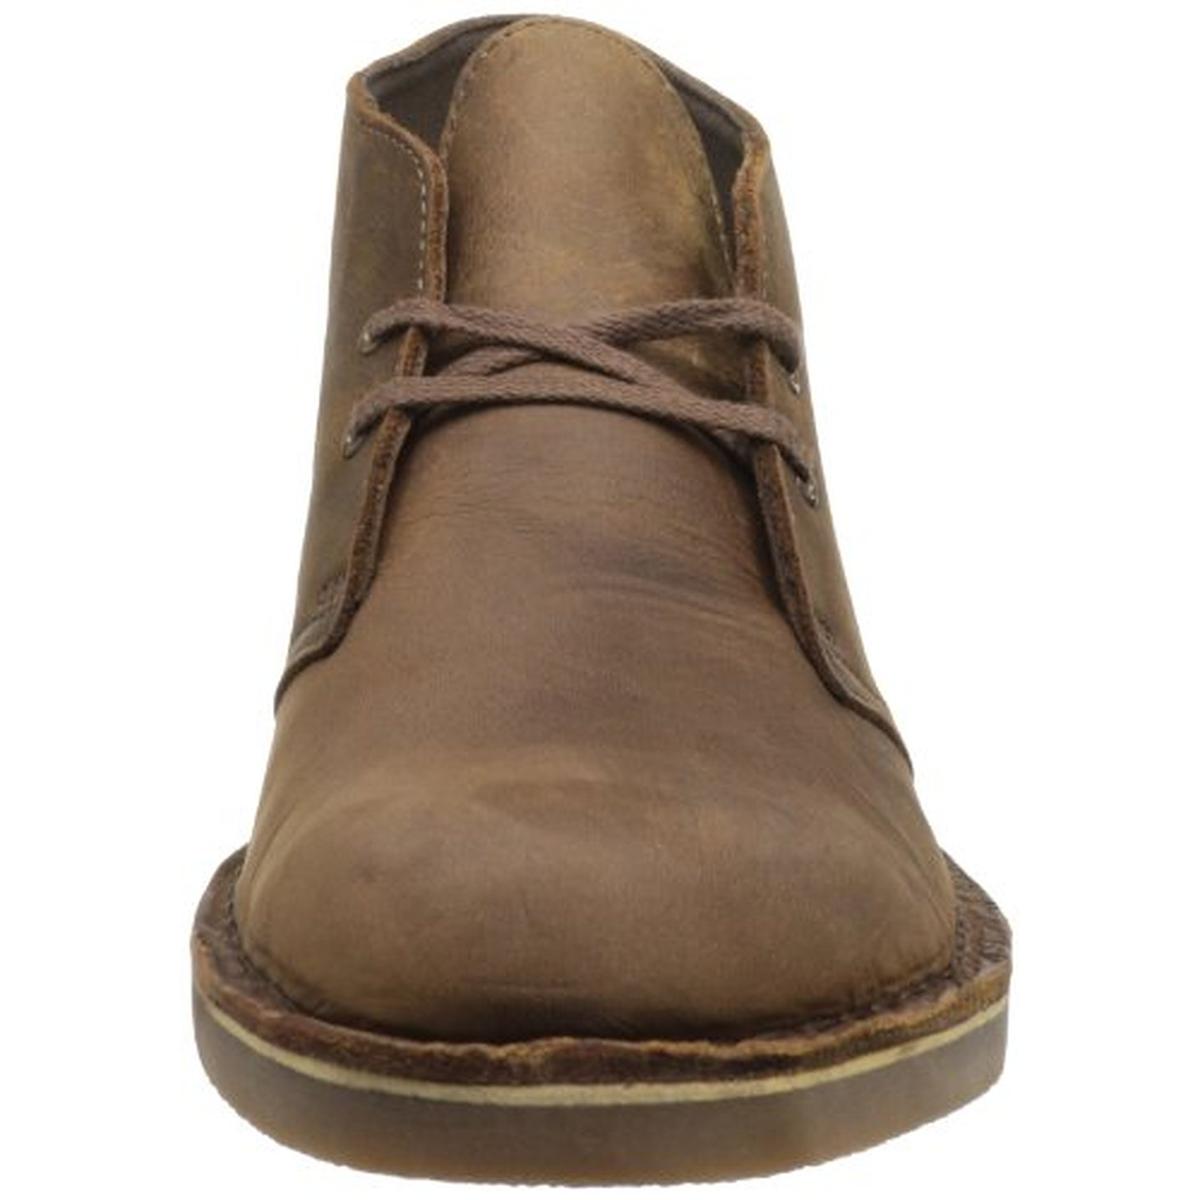 Clarks Mens Bushacre 2 Brown Leather Chukka Boots Shoes 9 Medium (D ...